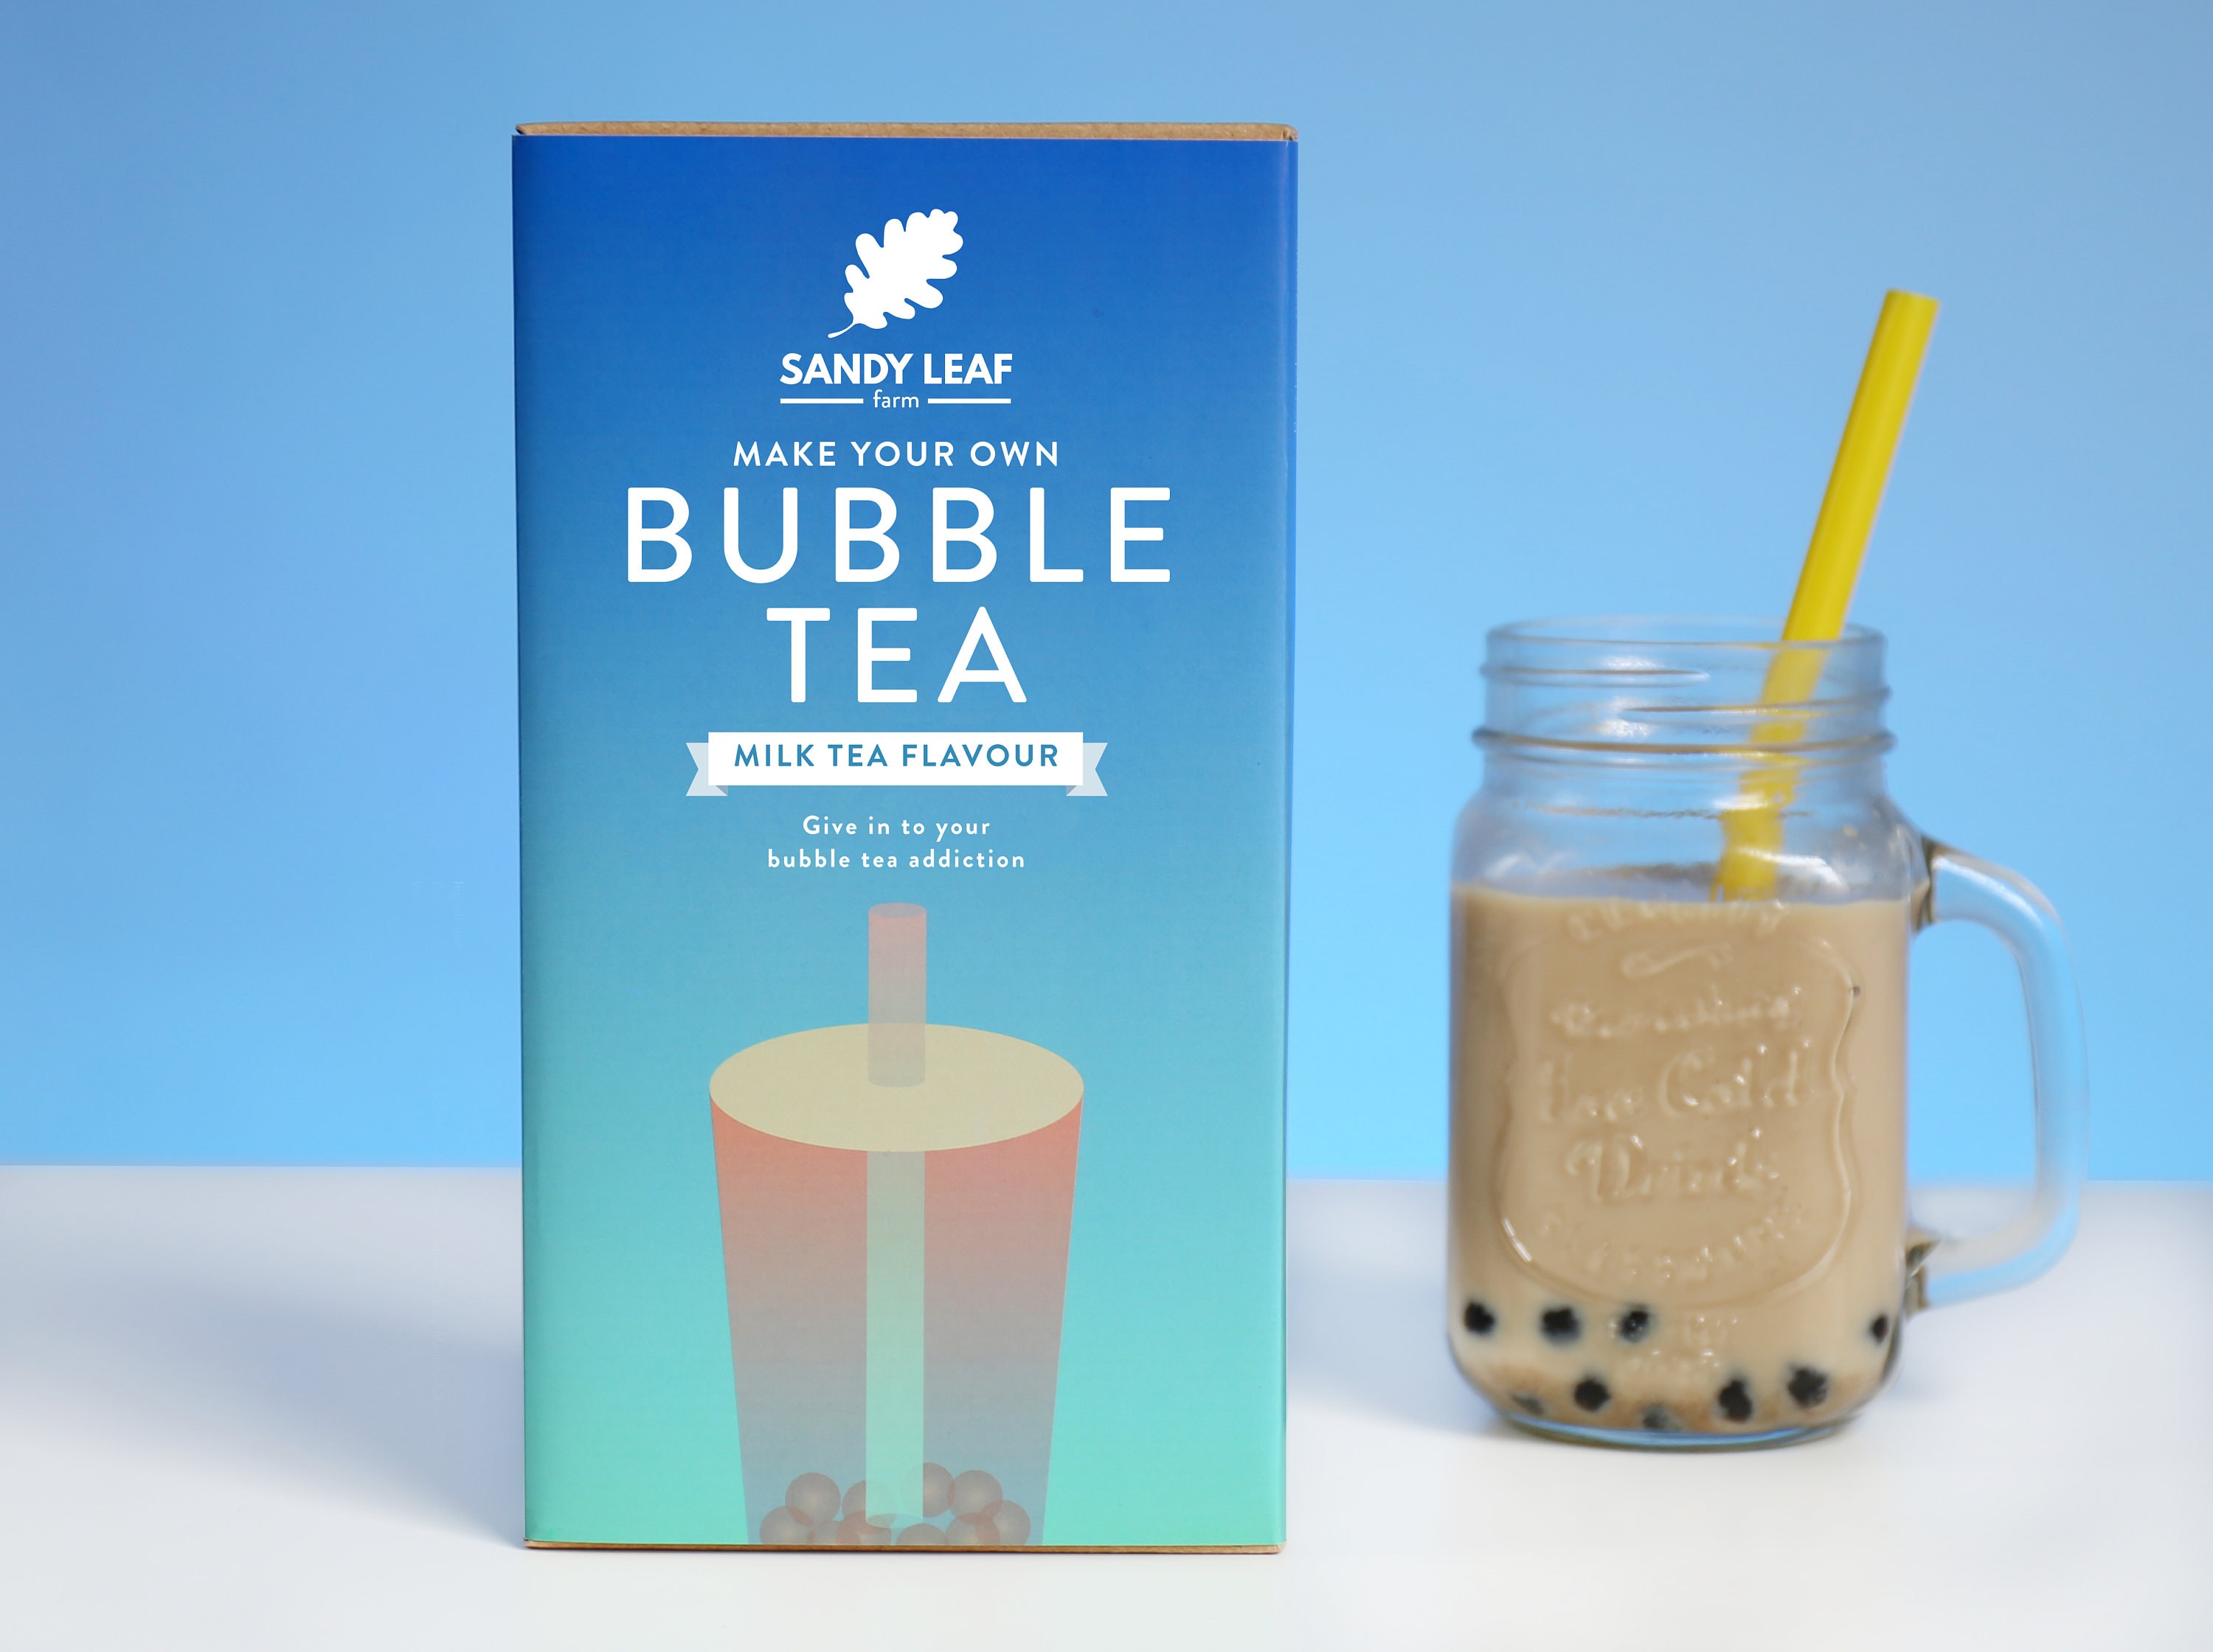 make your own bubble tea kit